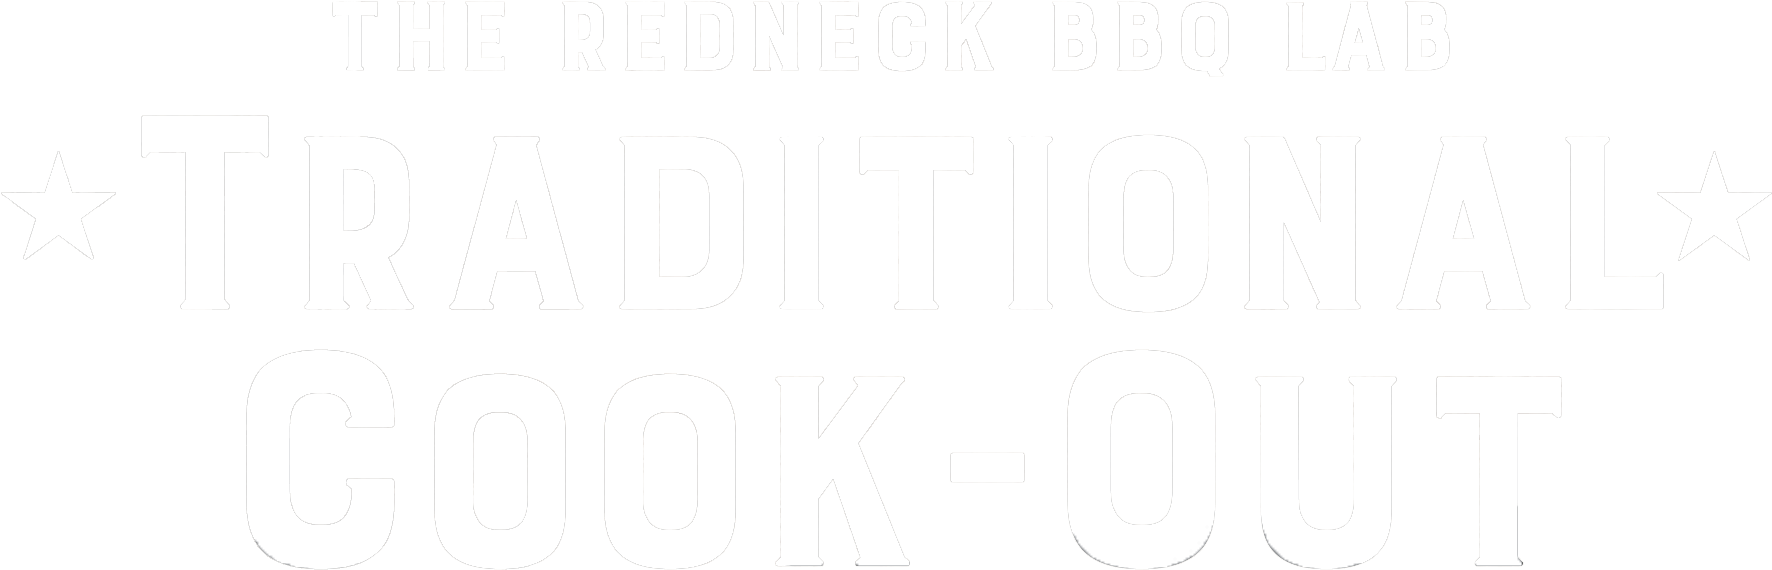 Redneck B B Q Lab Traditional Cookout Logo PNG